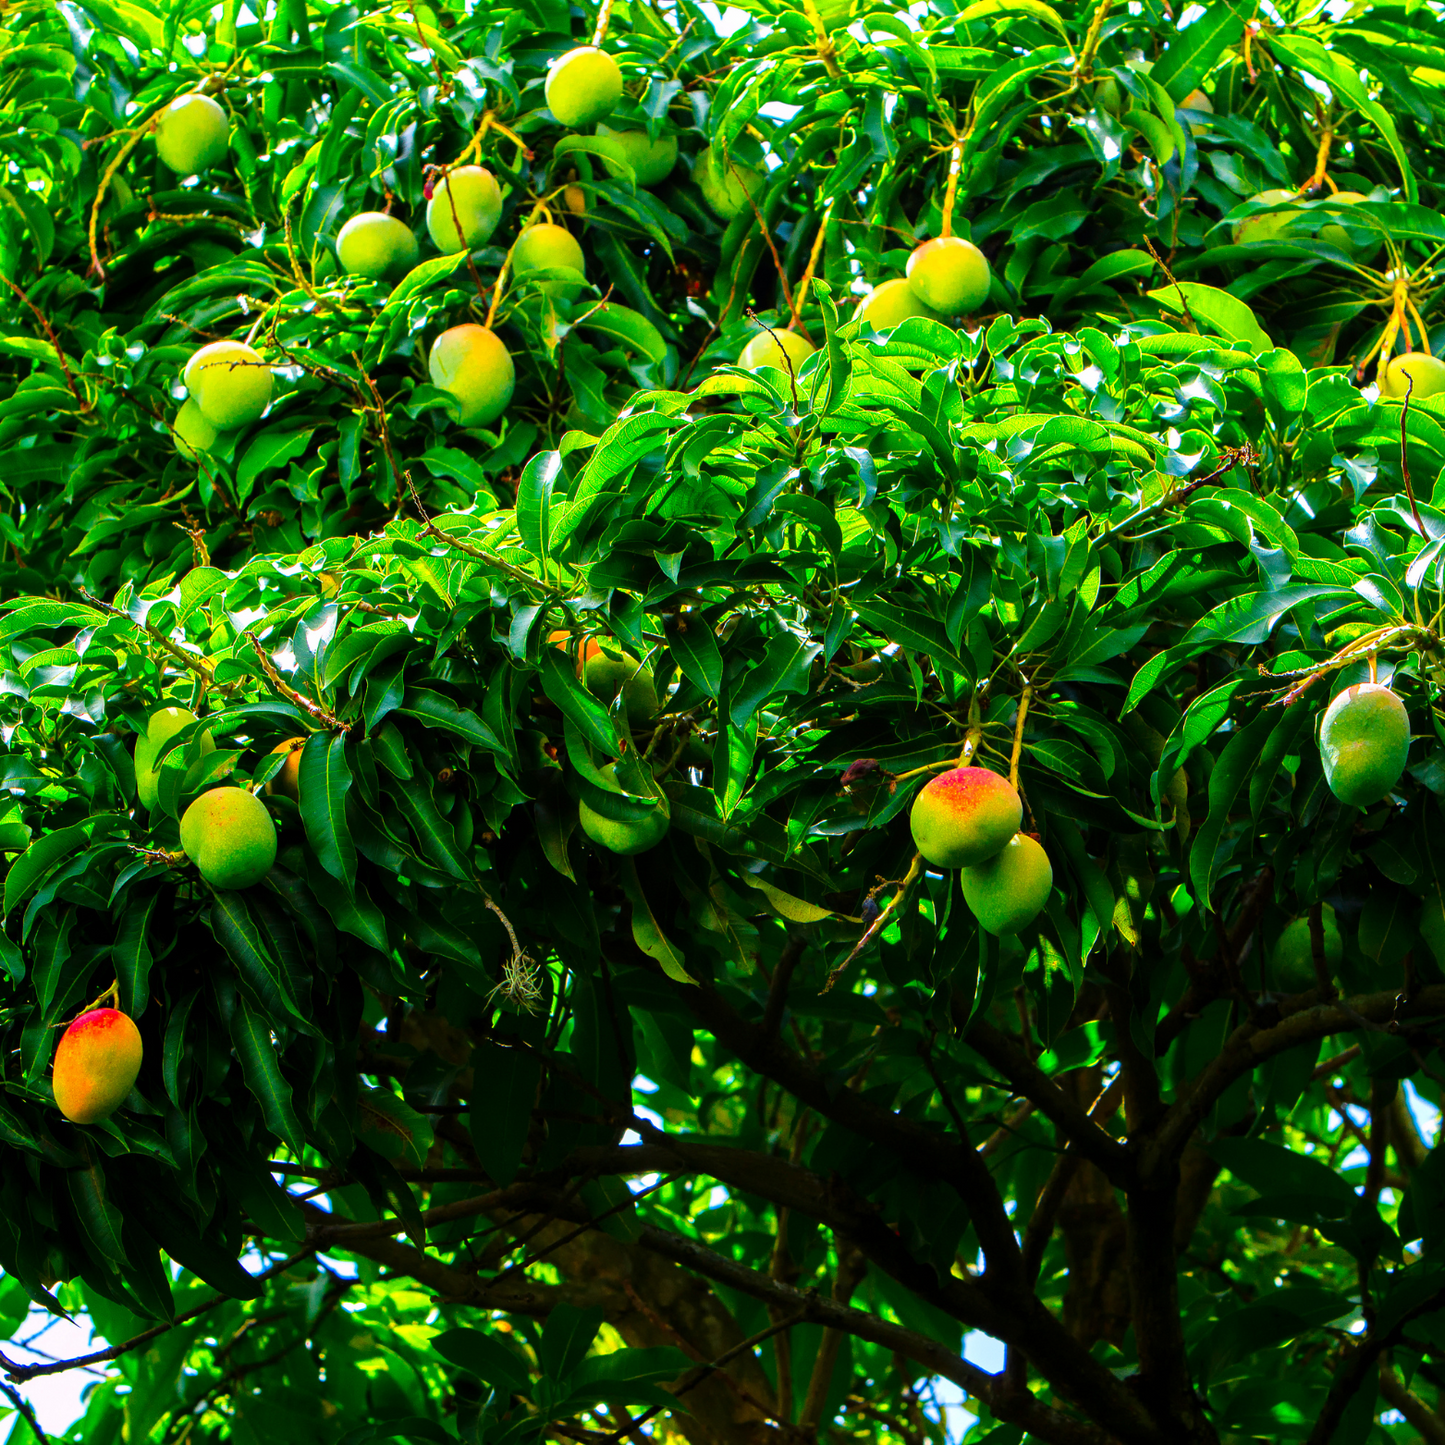 Morning Mango Loose Leaf Mango Fruit Flavored Black Tea